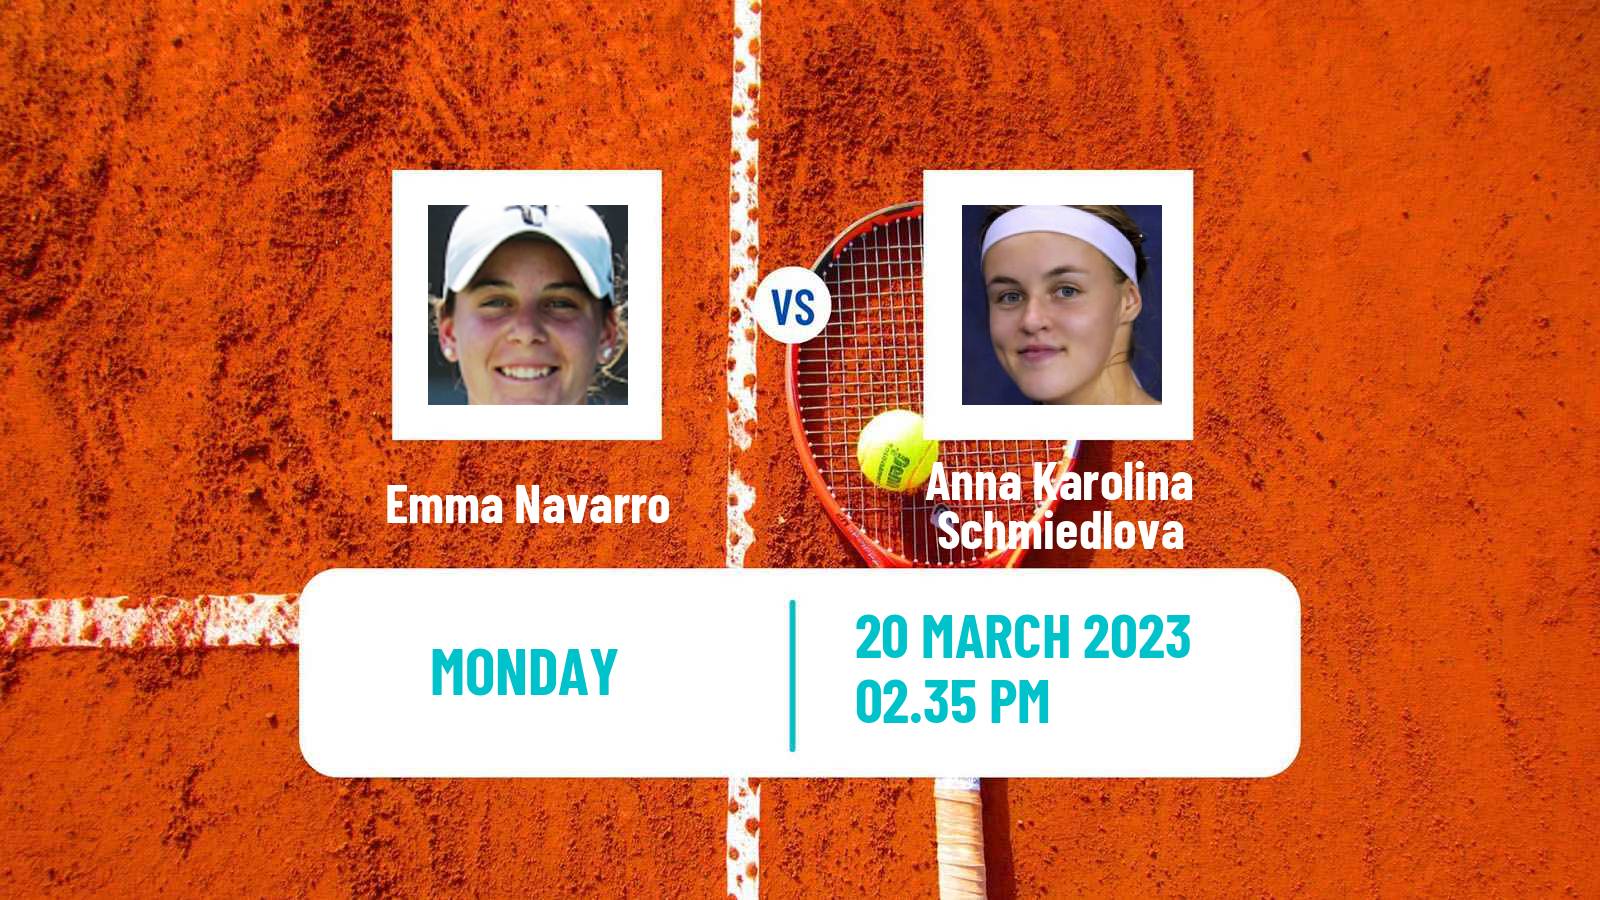 Tennis WTA Miami Emma Navarro - Anna Karolina Schmiedlova